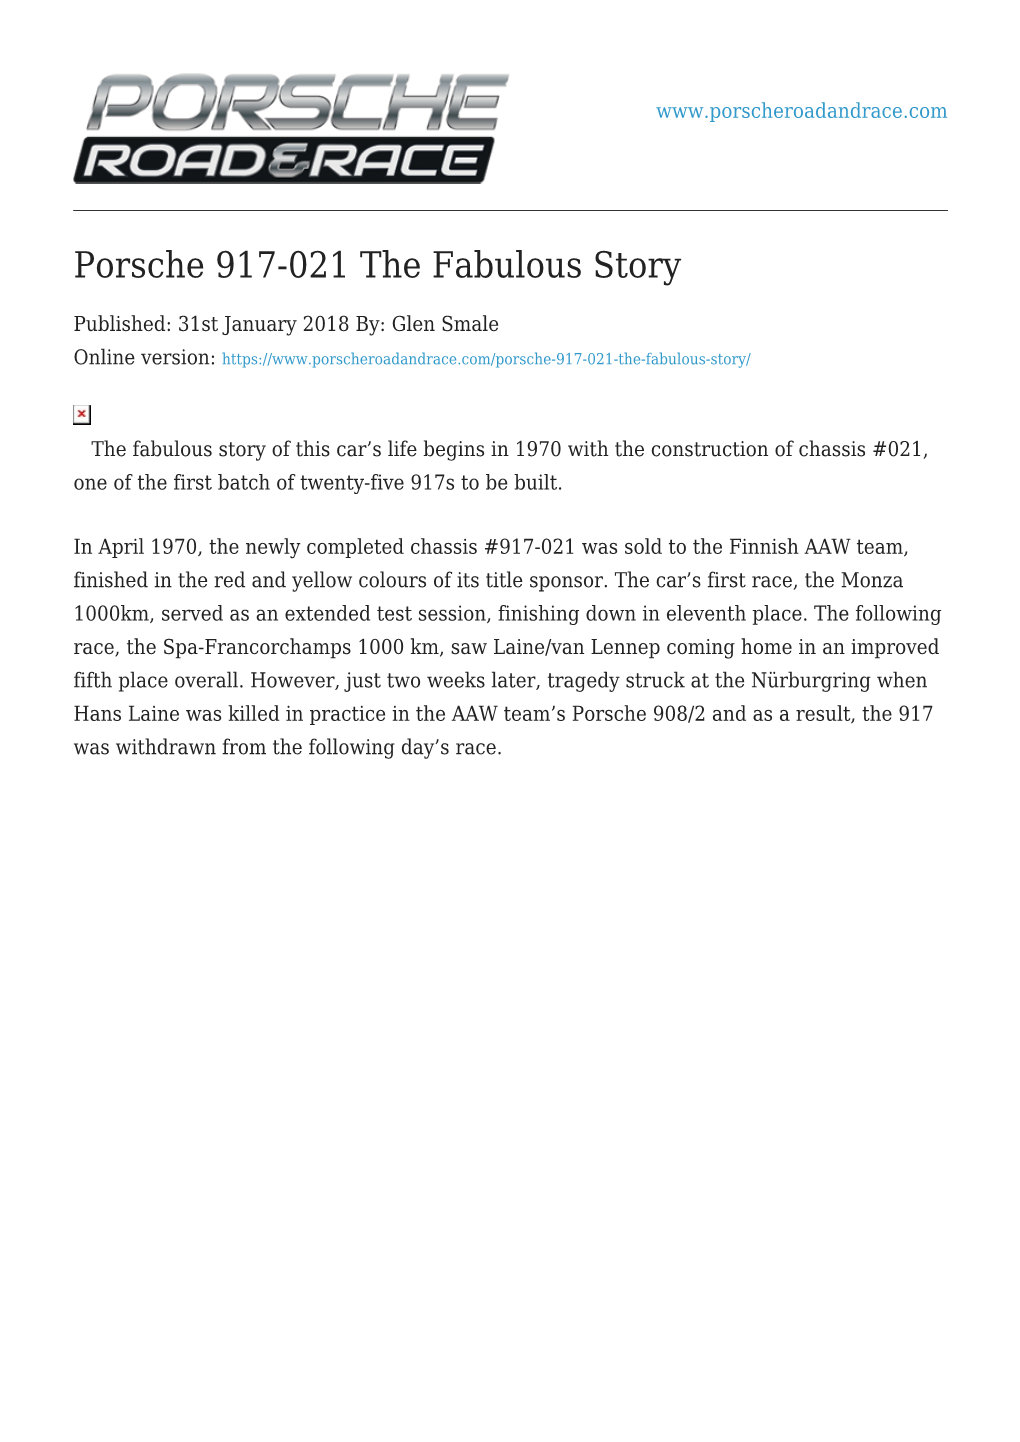 Porsche 917-021 the Fabulous Story